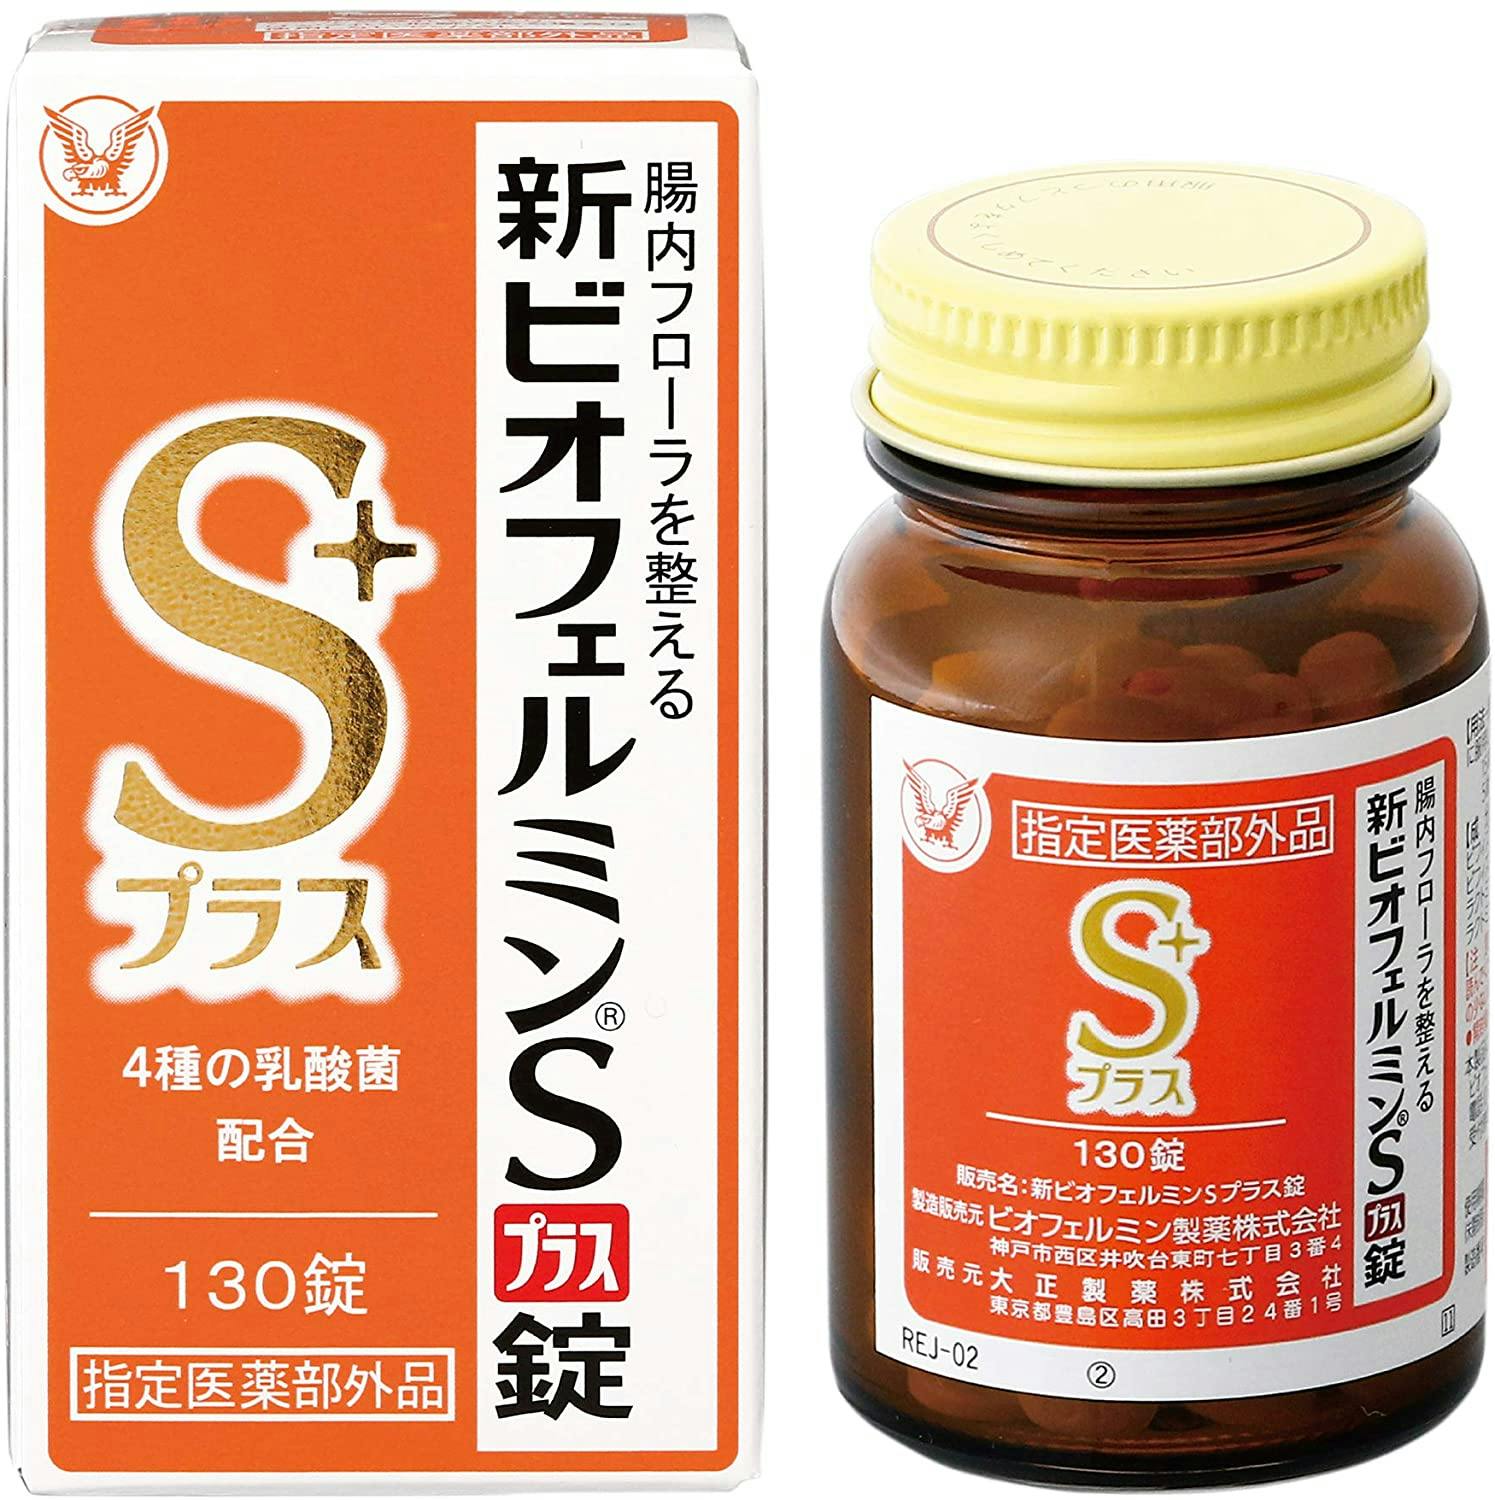 日本 大正制药 新版 Japan's Bestselling Probiotics益生菌 Taisho Pharmaceutical New Biofermin S Plus